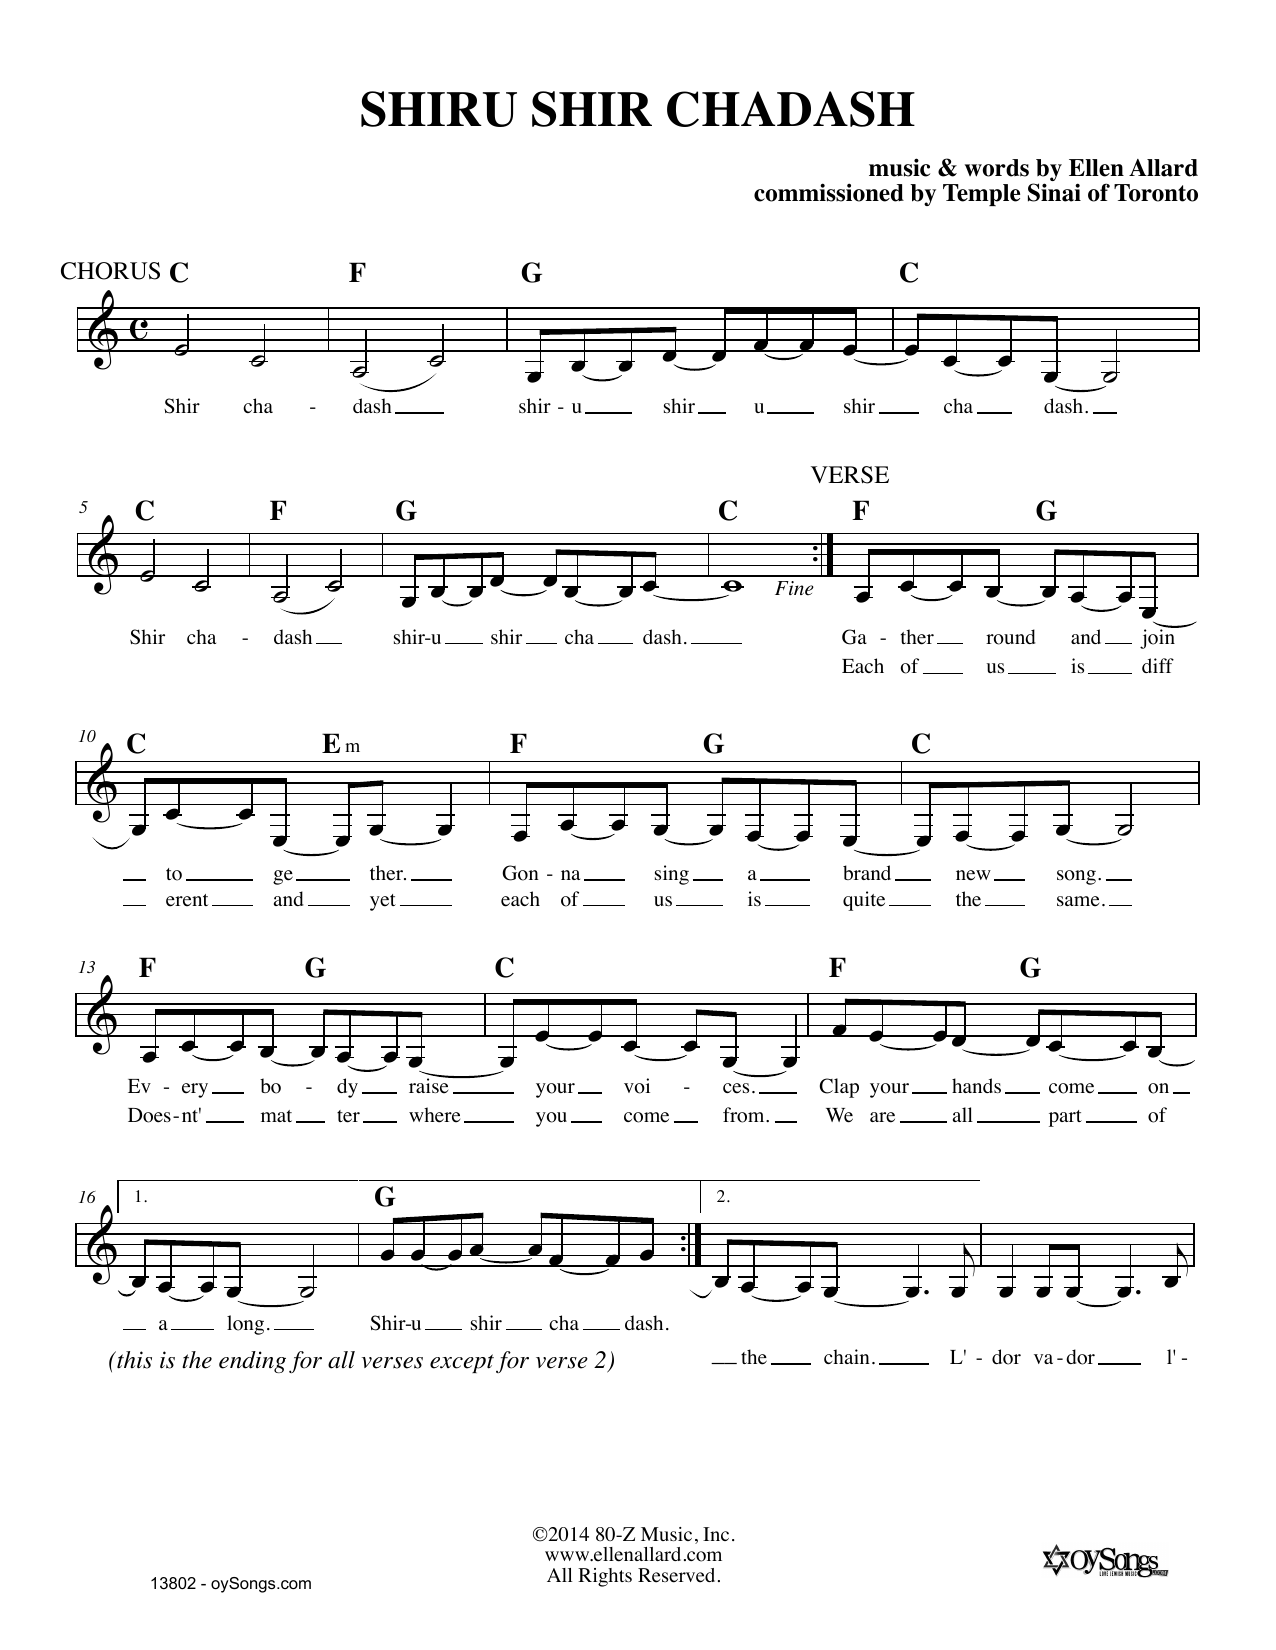 Download Ellen Allard Shiru Shir Chadash Sheet Music and learn how to play Melody Line, Lyrics & Chords PDF digital score in minutes